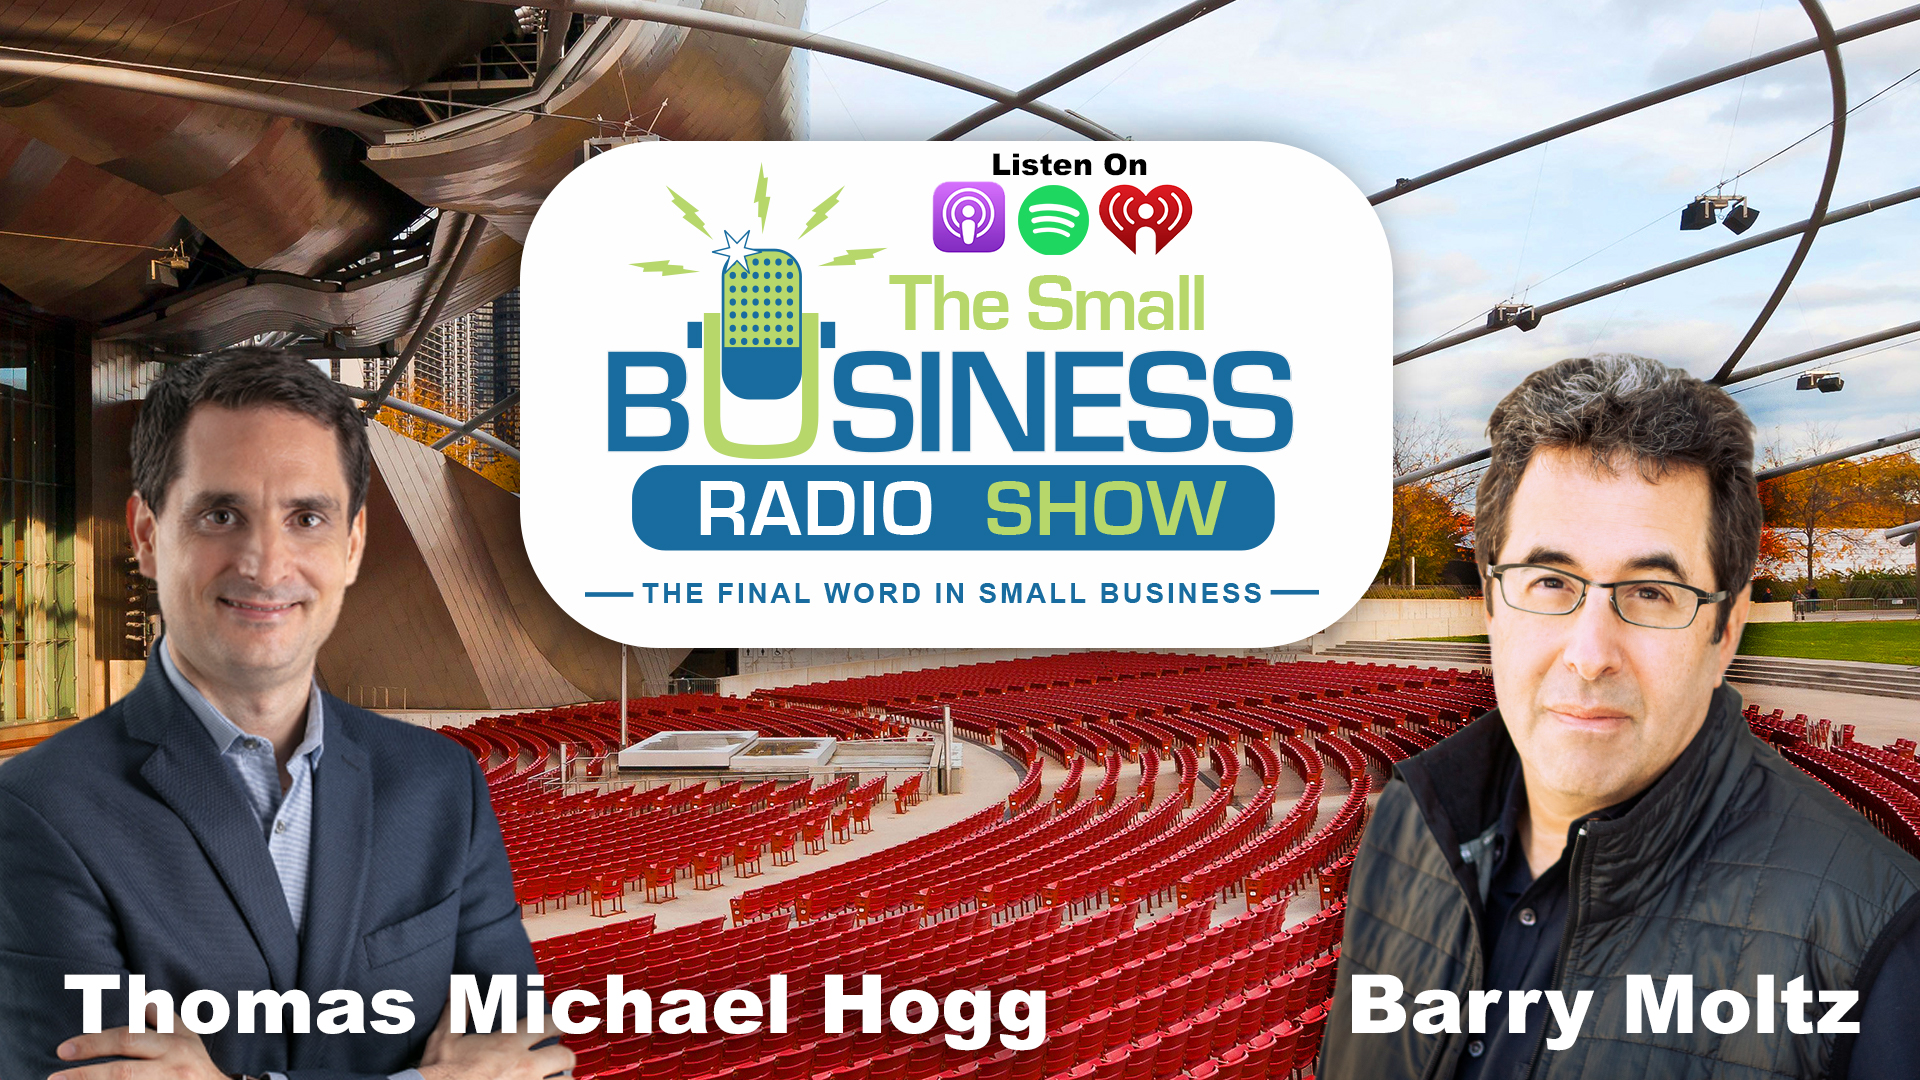 Thomas Michael Hogg on The Small Business Radio Show